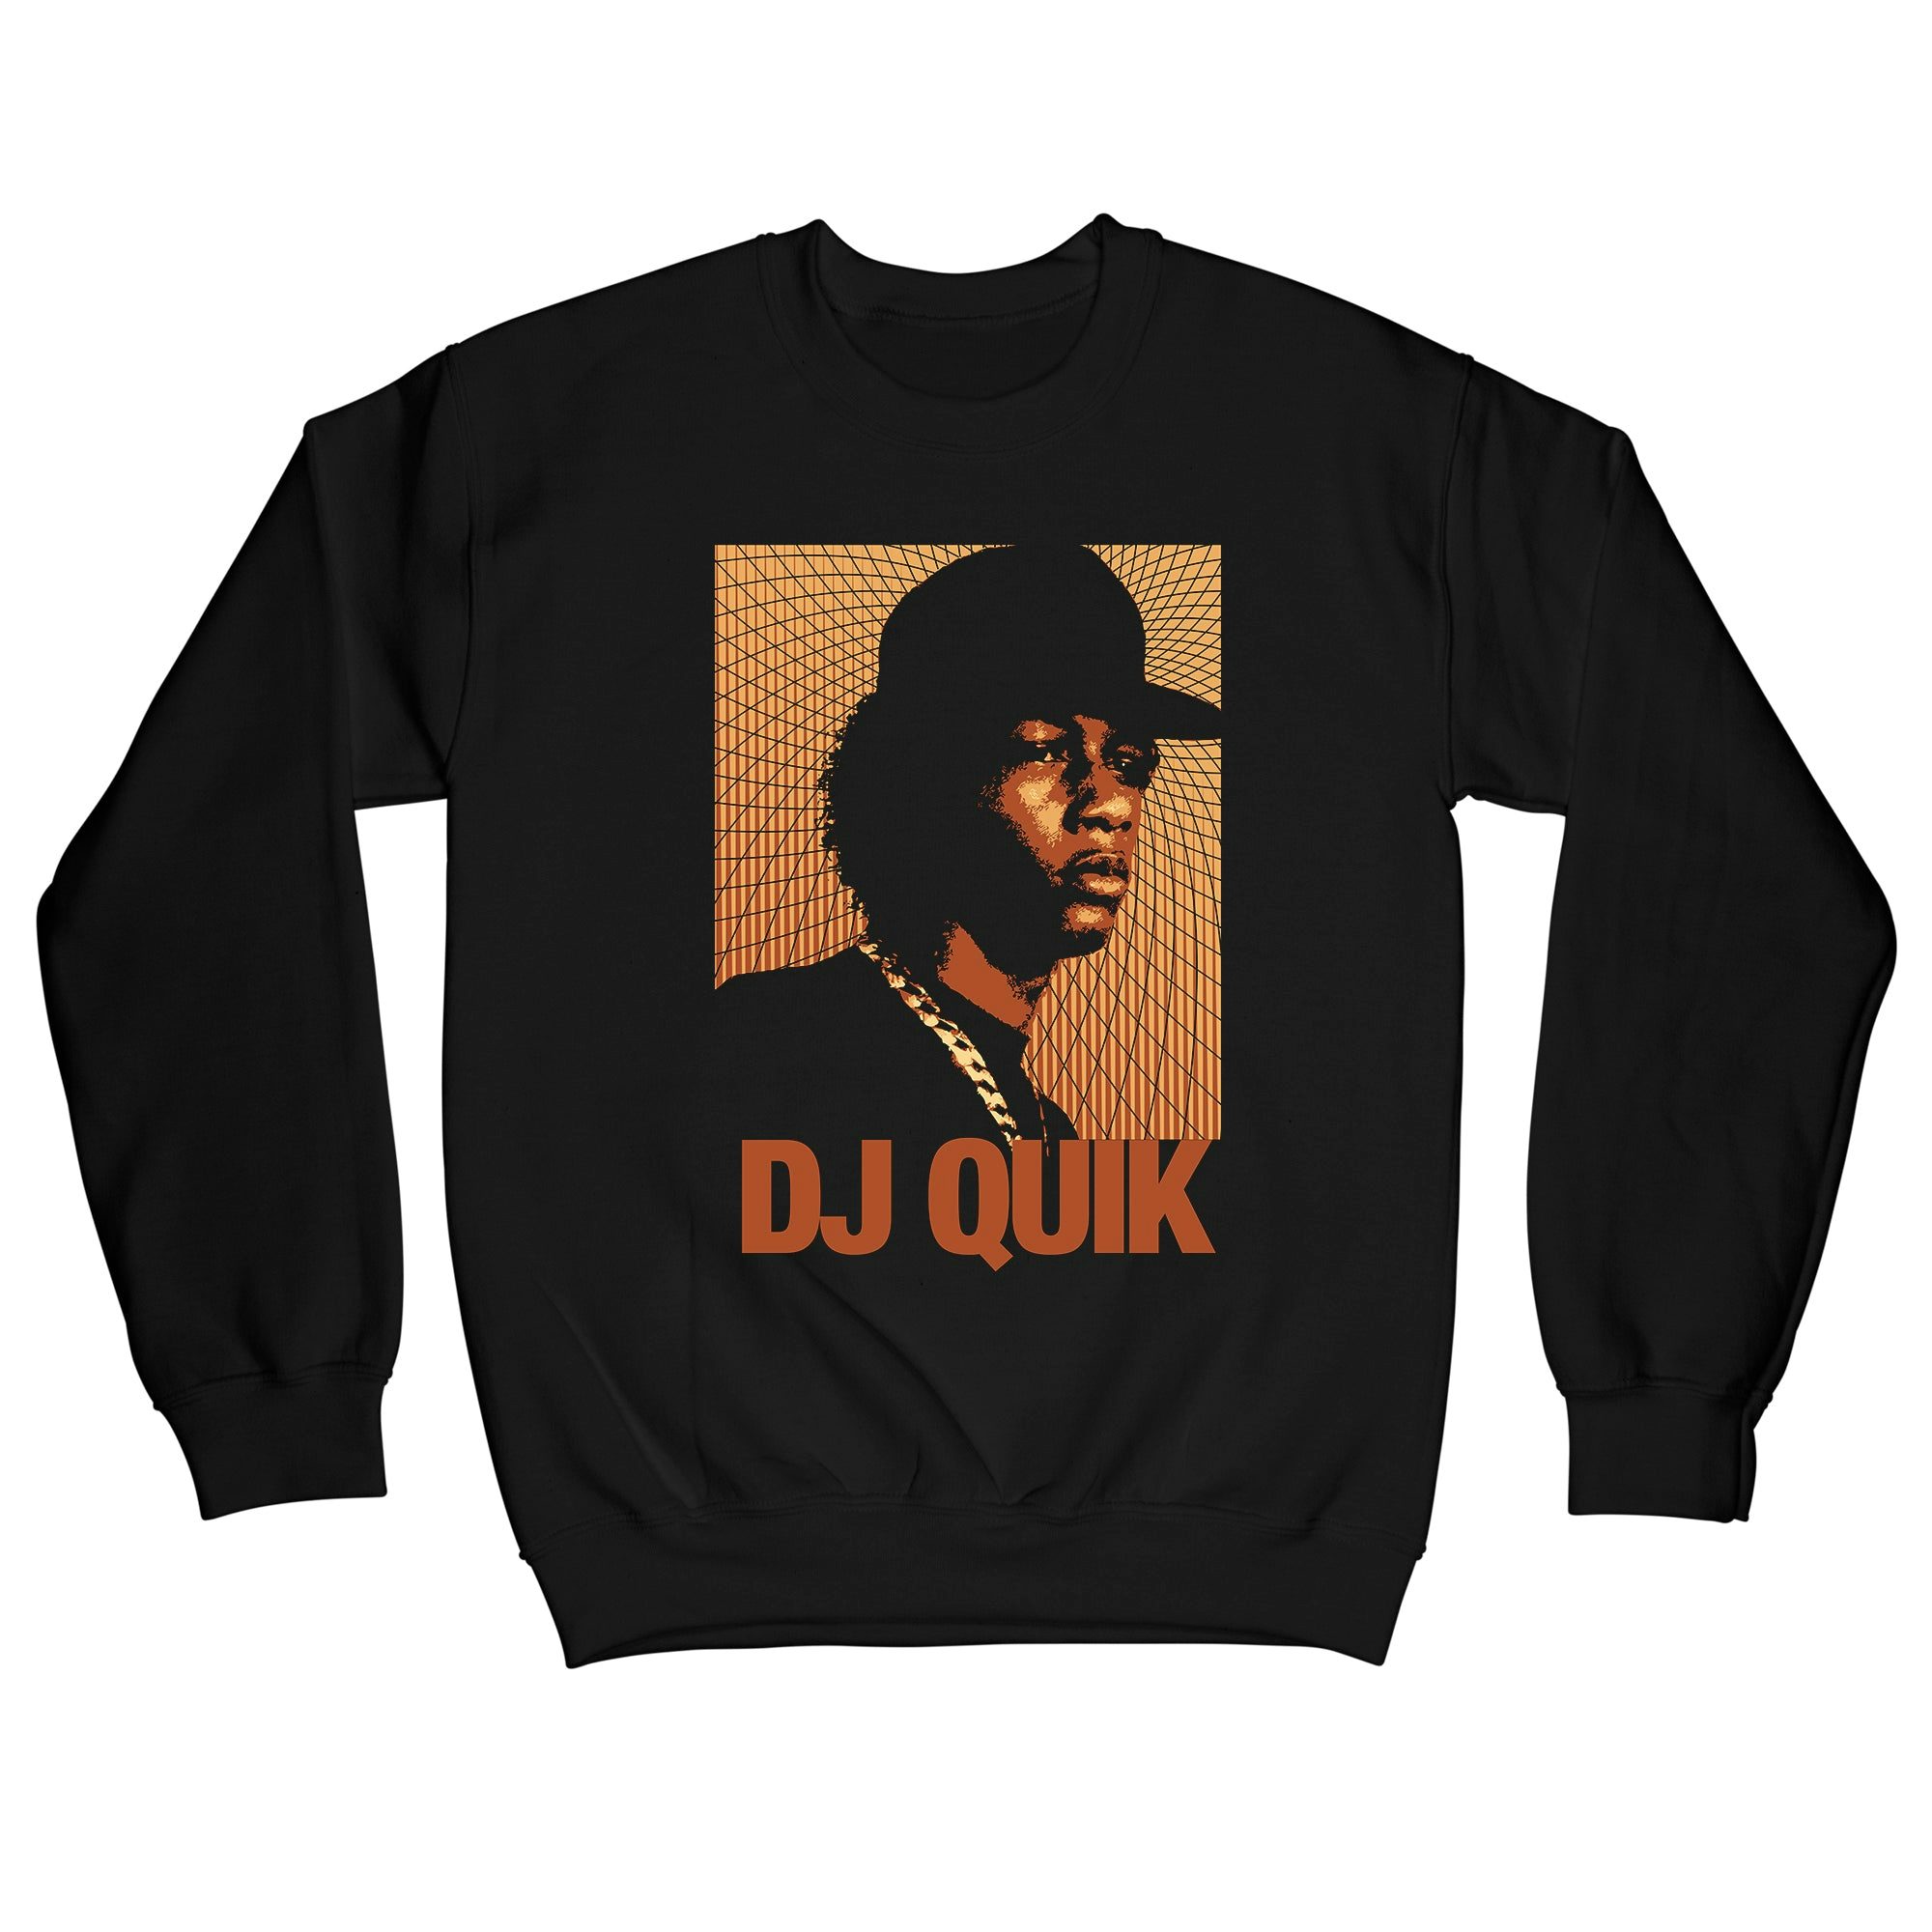 Dj Quik Shirts, Dj Quik Merch, Dj Quik Hoodies, Dj Quik Vinyl